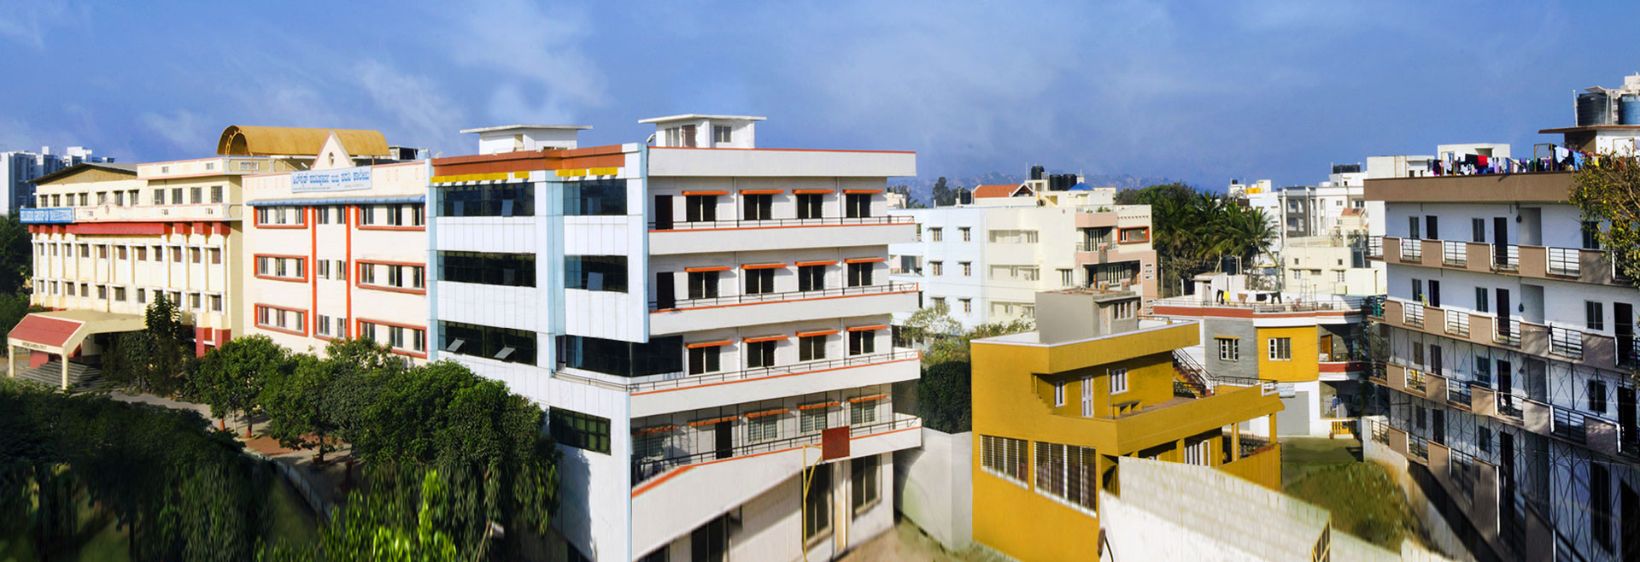 Hill Side College of Nursing - Bangalore